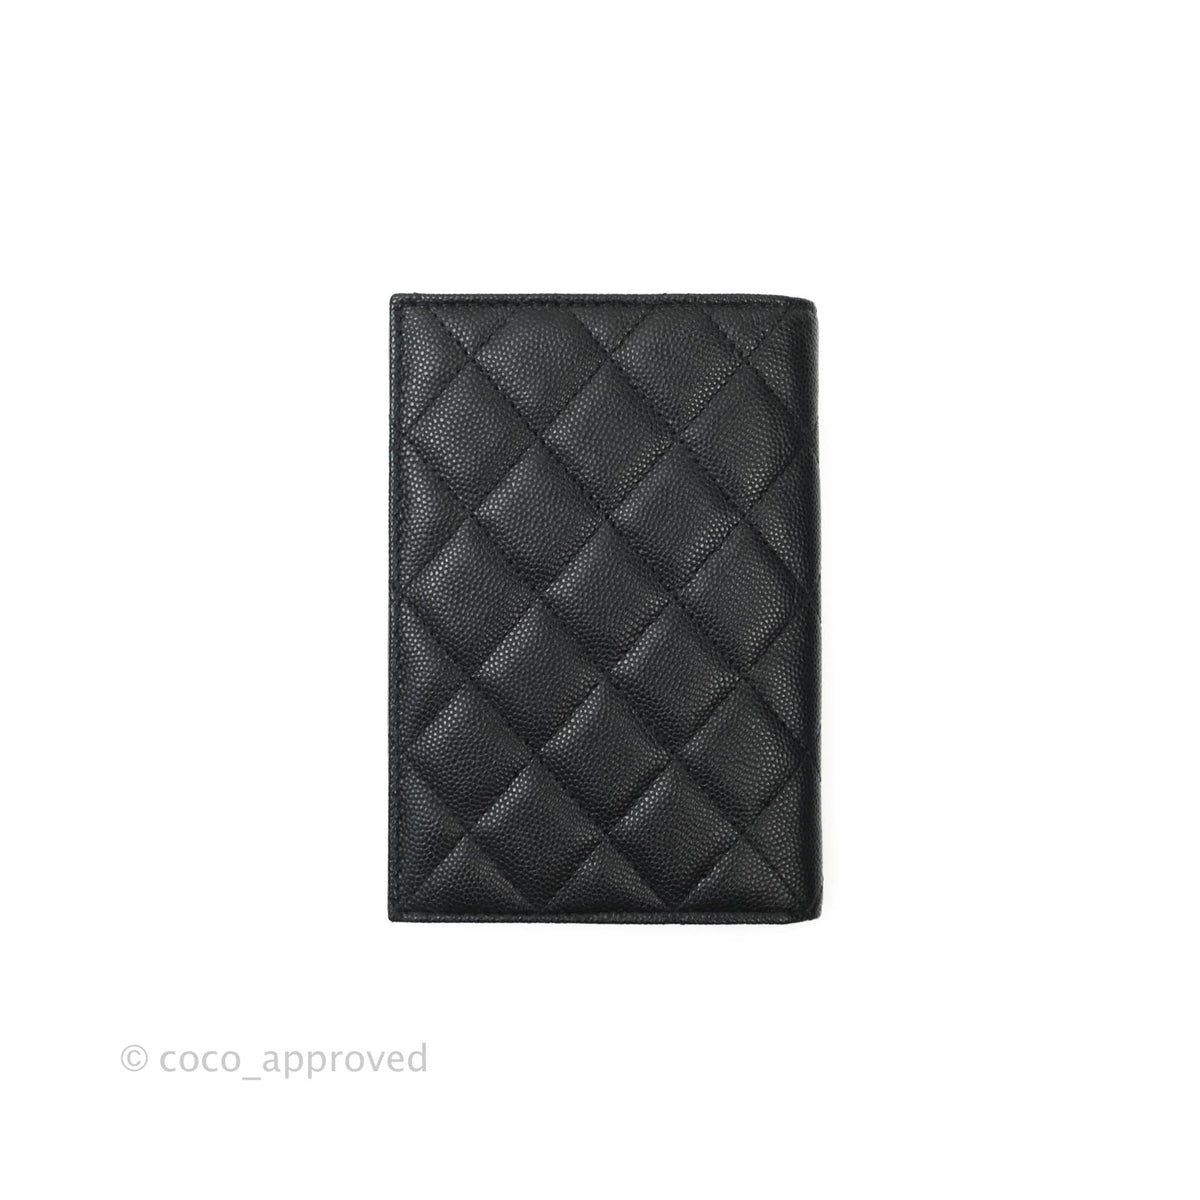 Chanel Classic Passport Holder Black Caviar - Kaialux